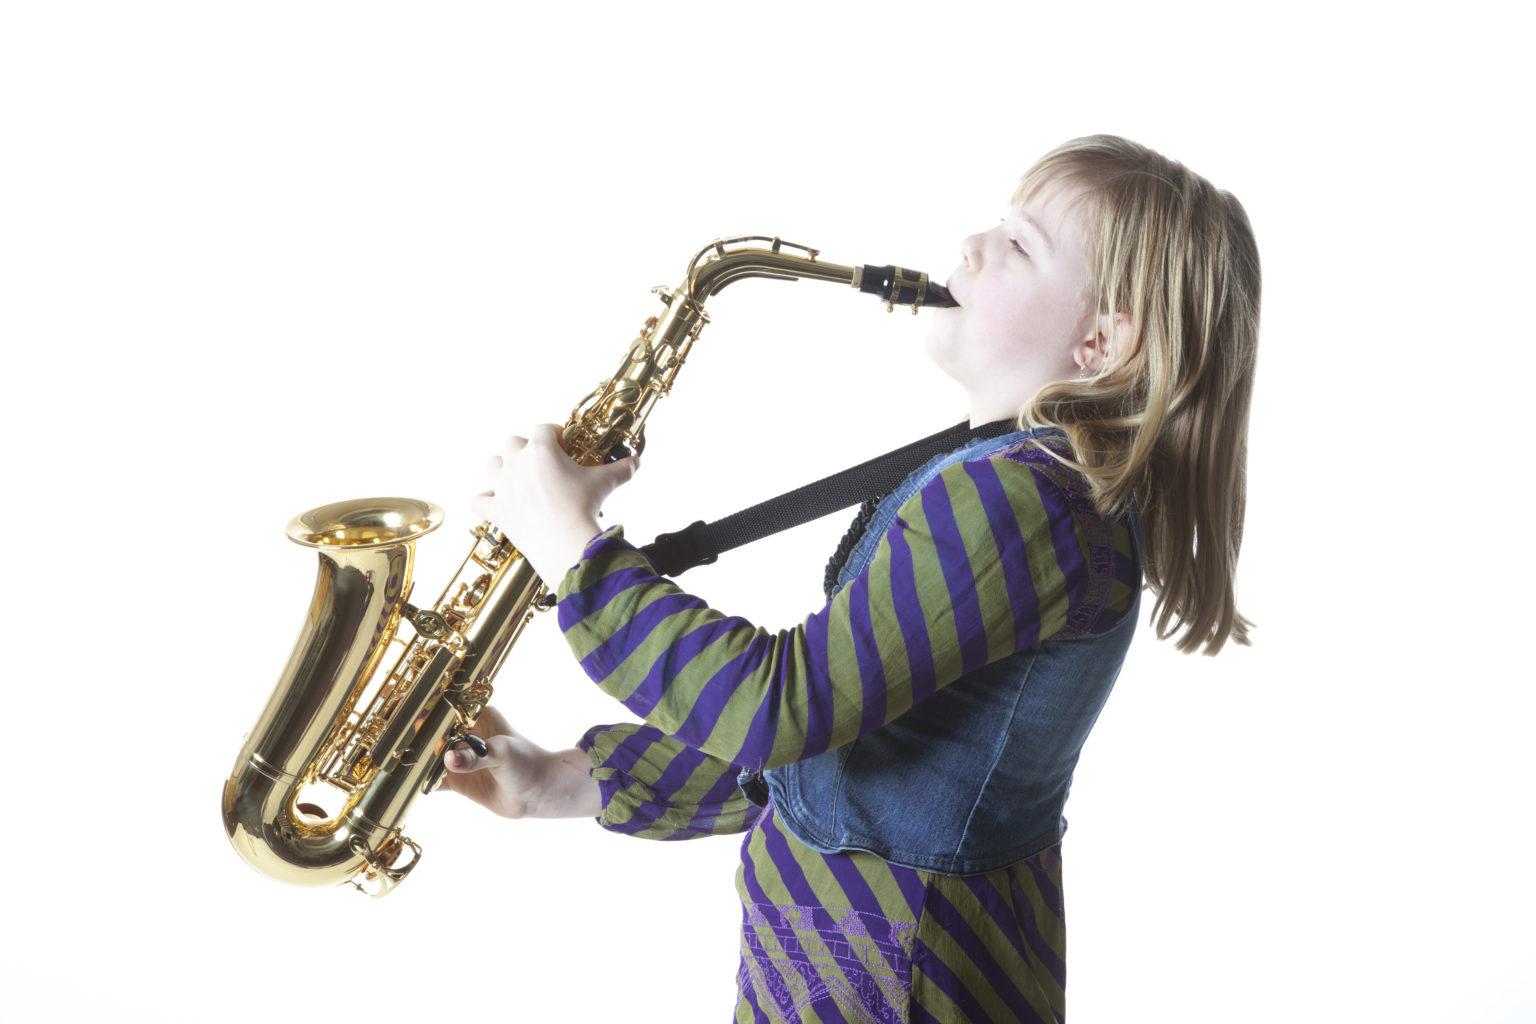 Девушка на саксофоне в студии. Человек с саксофоном. Ребенок играет на саксофоне фото.